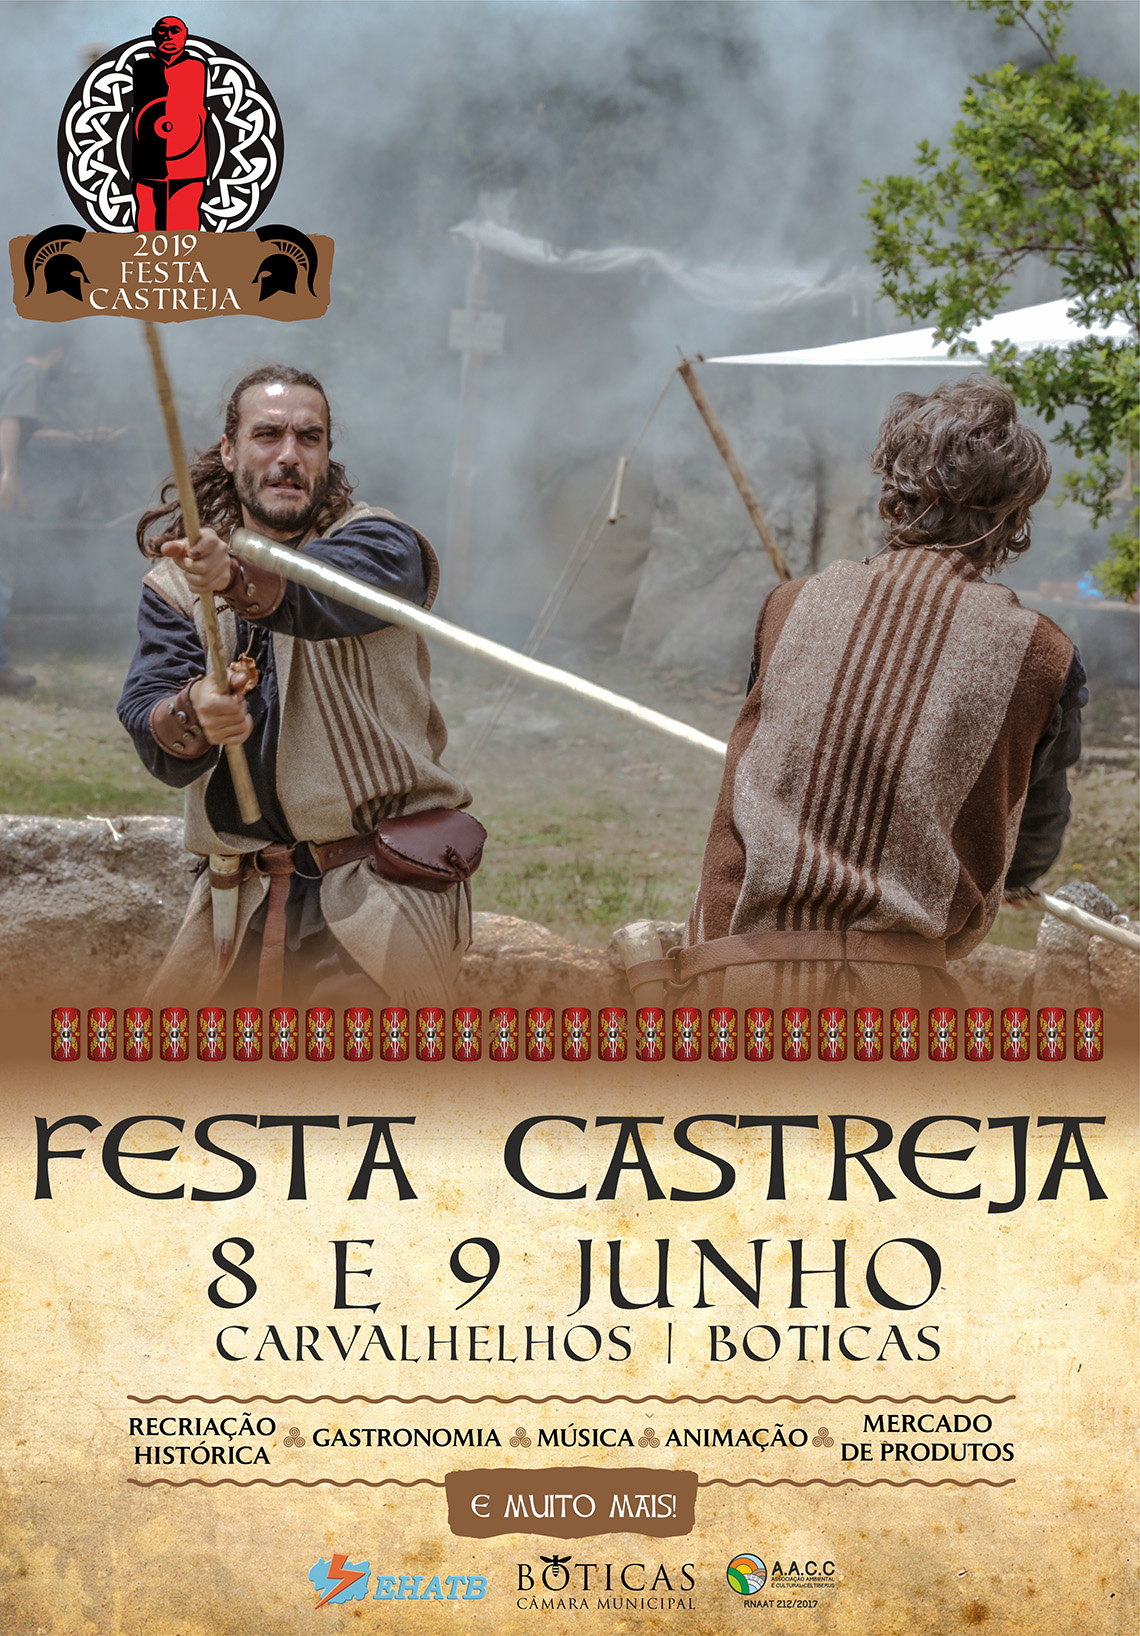 Festa Castreja 2019